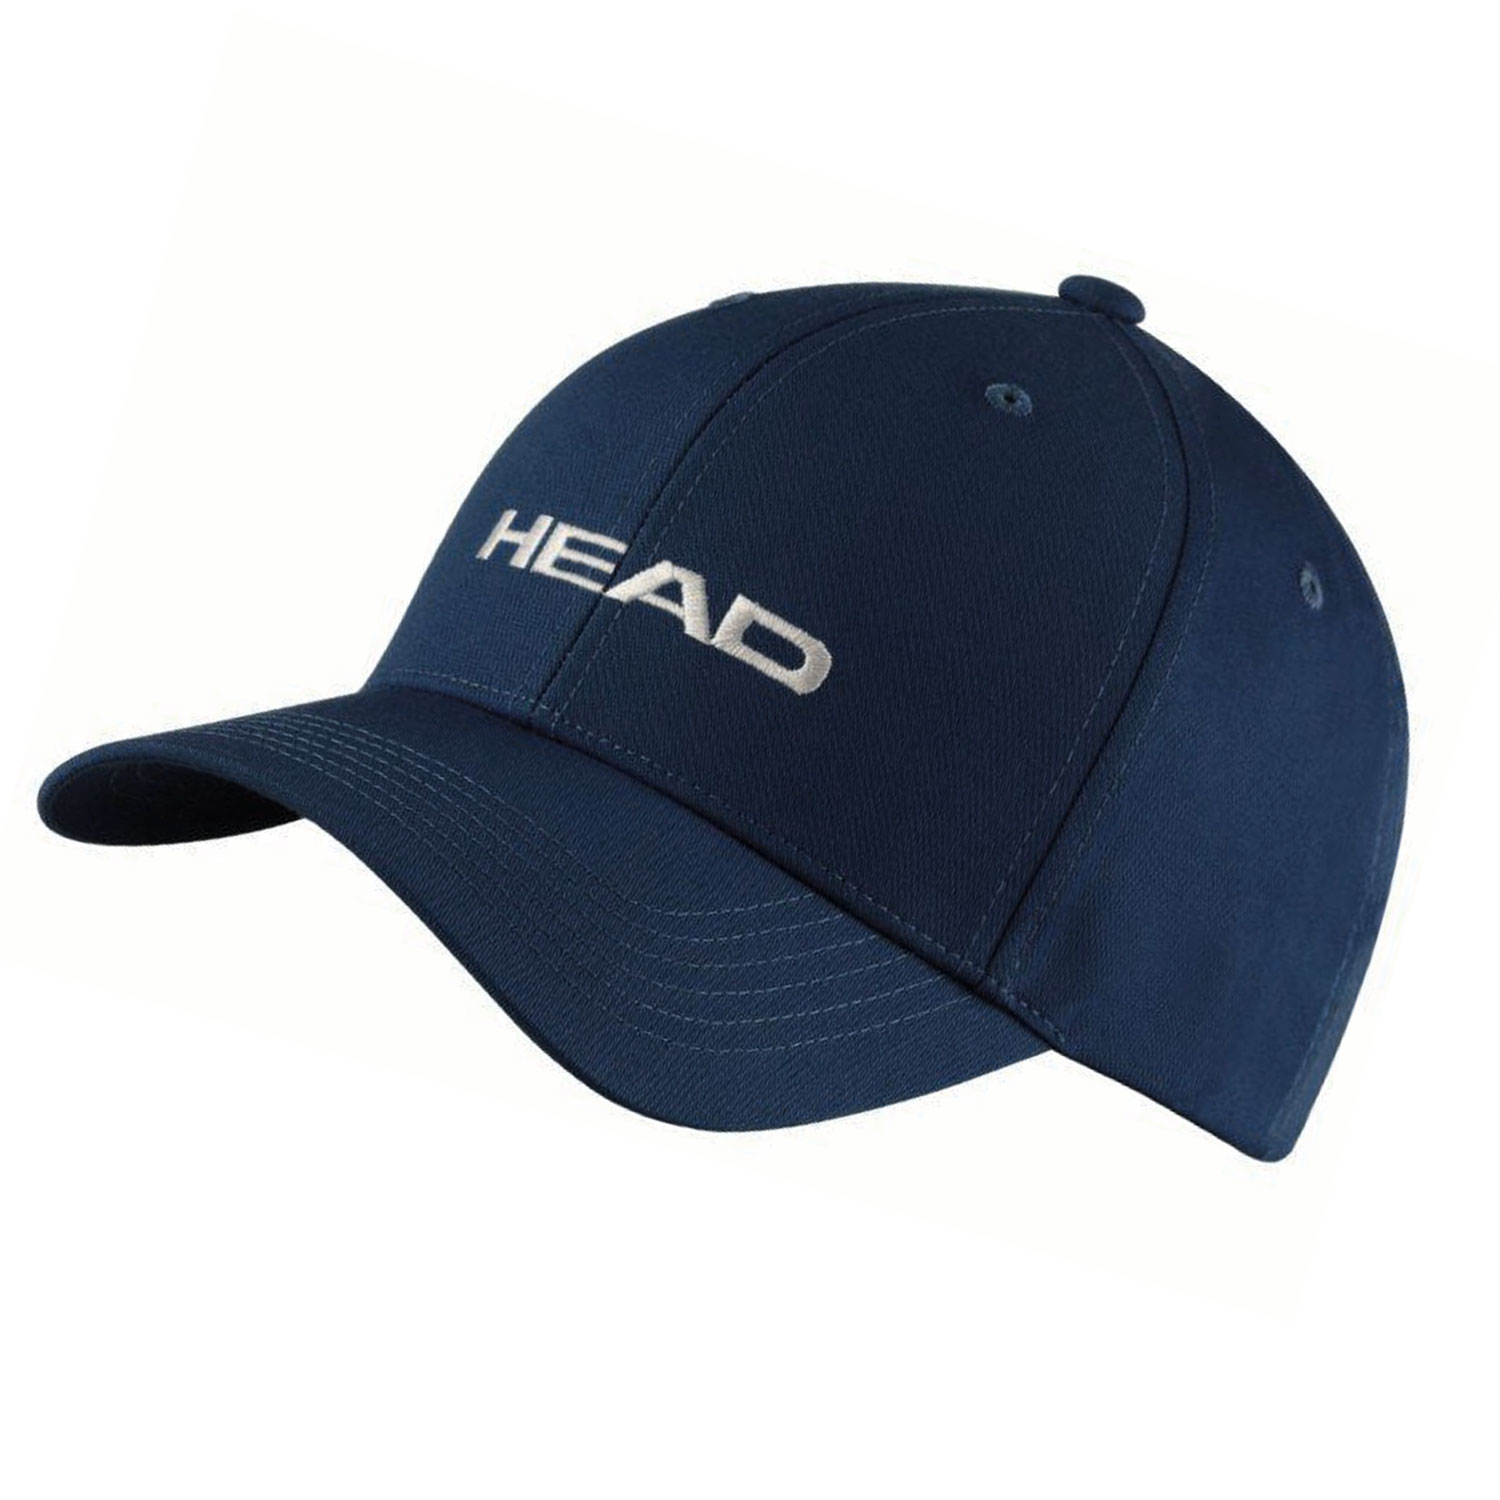 Head Promotion Cap - Navy